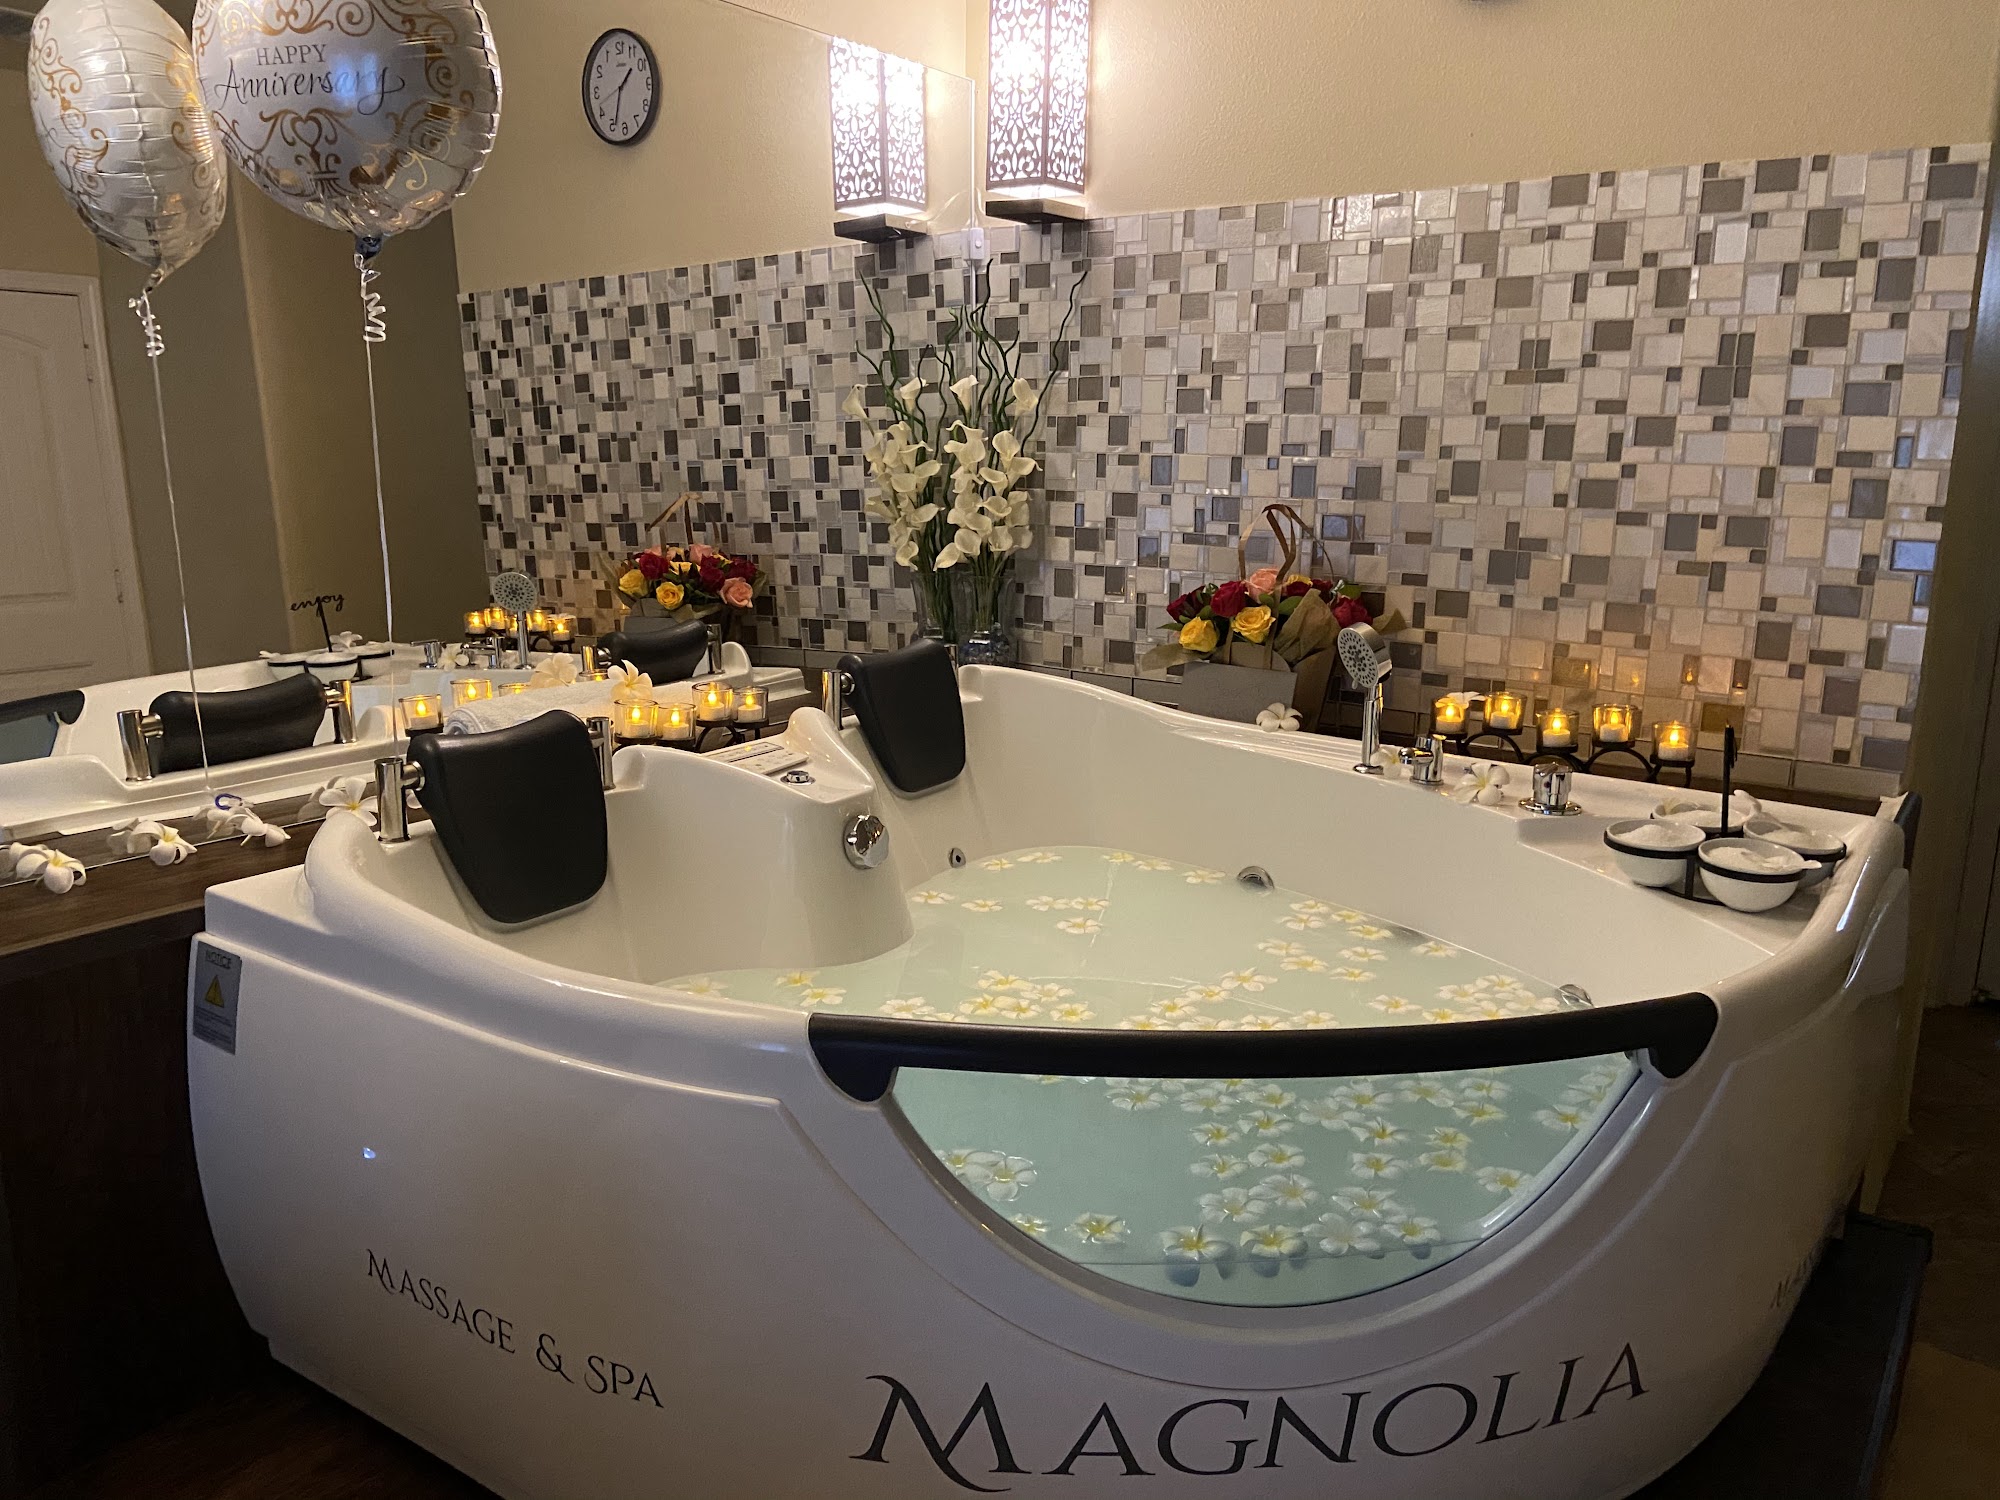 Magnolia Massage & Spa